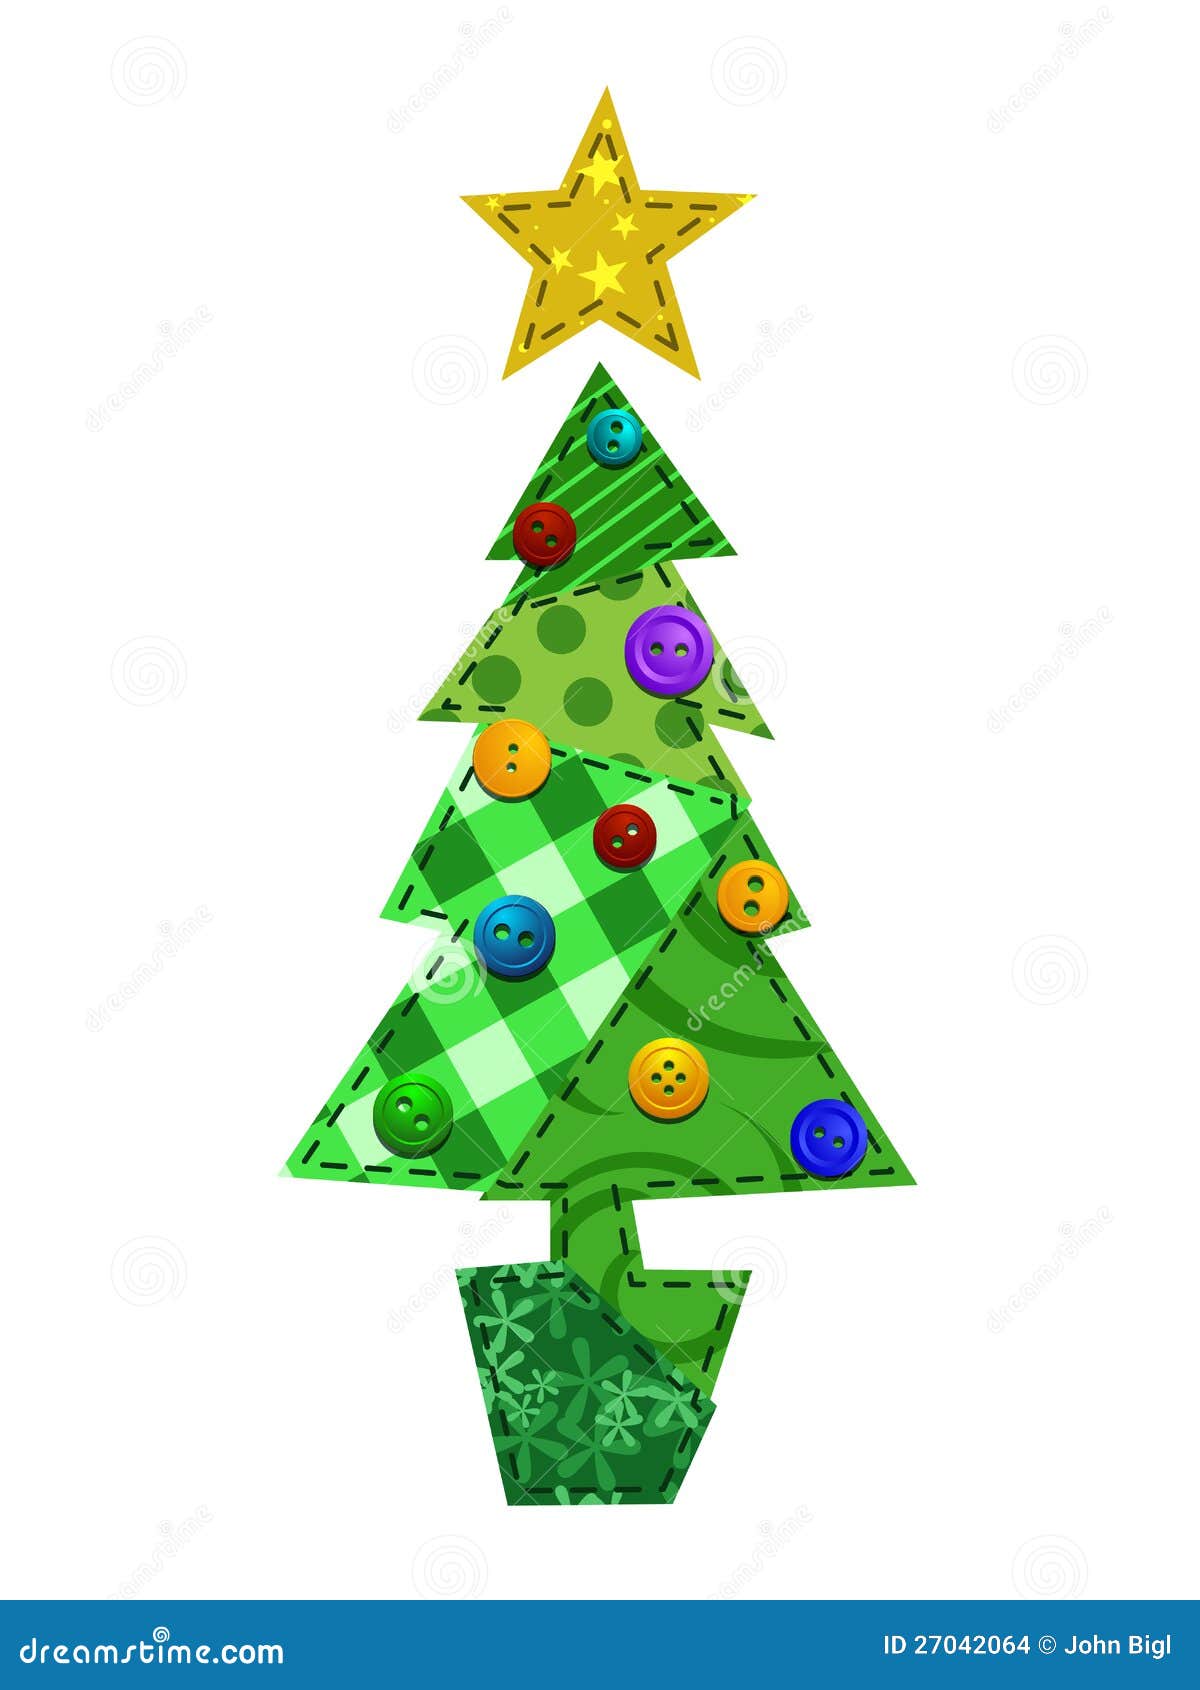 Fabric Christmas Tree stock vector. Illustration of tree - 27042064